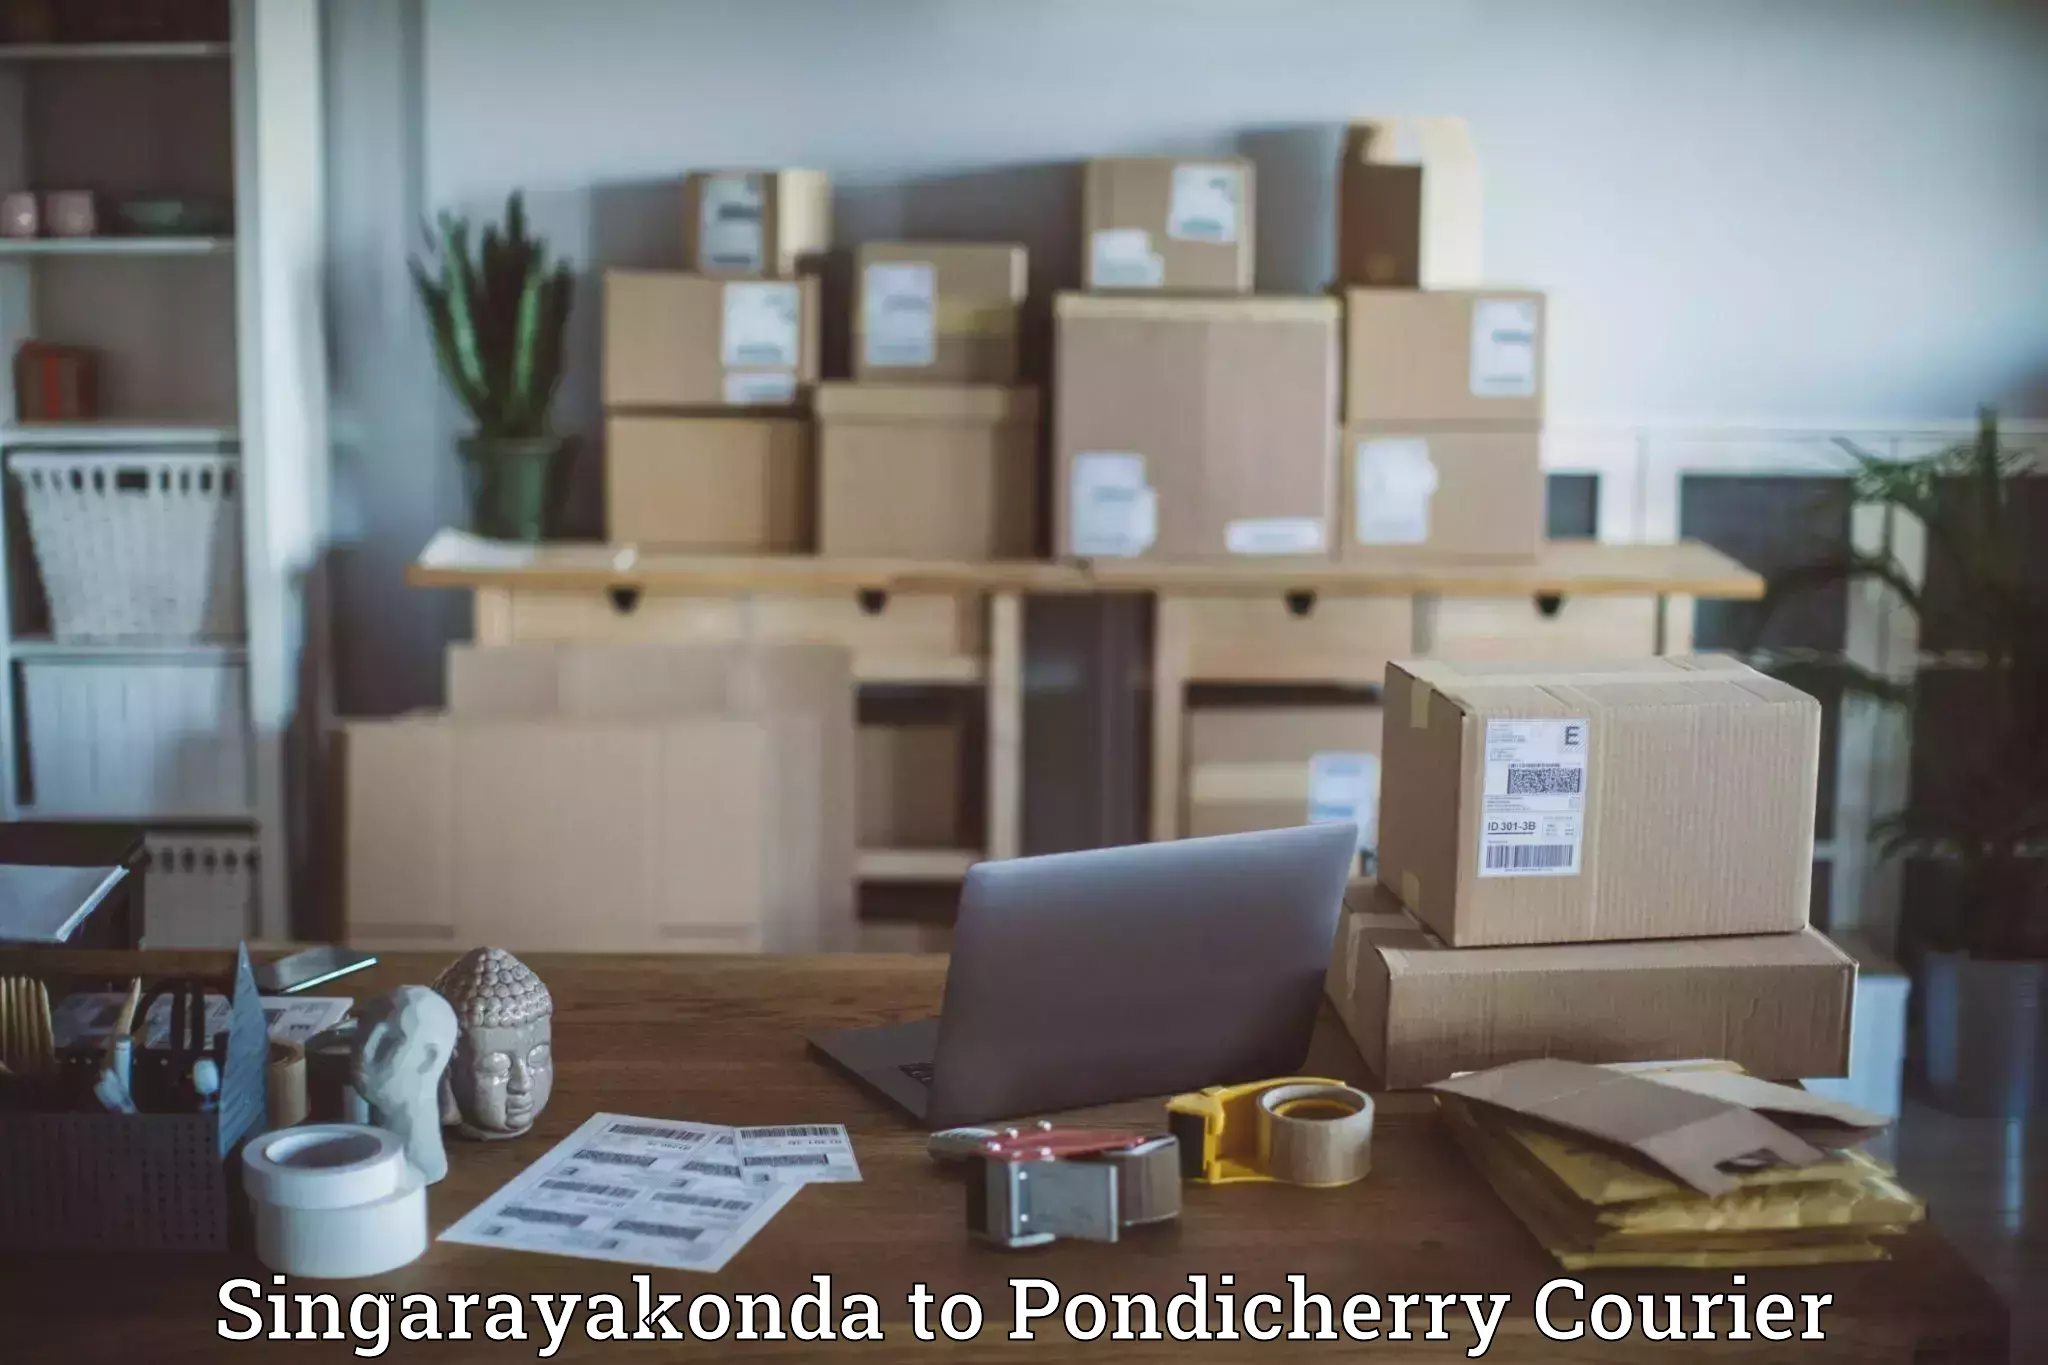 Local delivery service Singarayakonda to Pondicherry